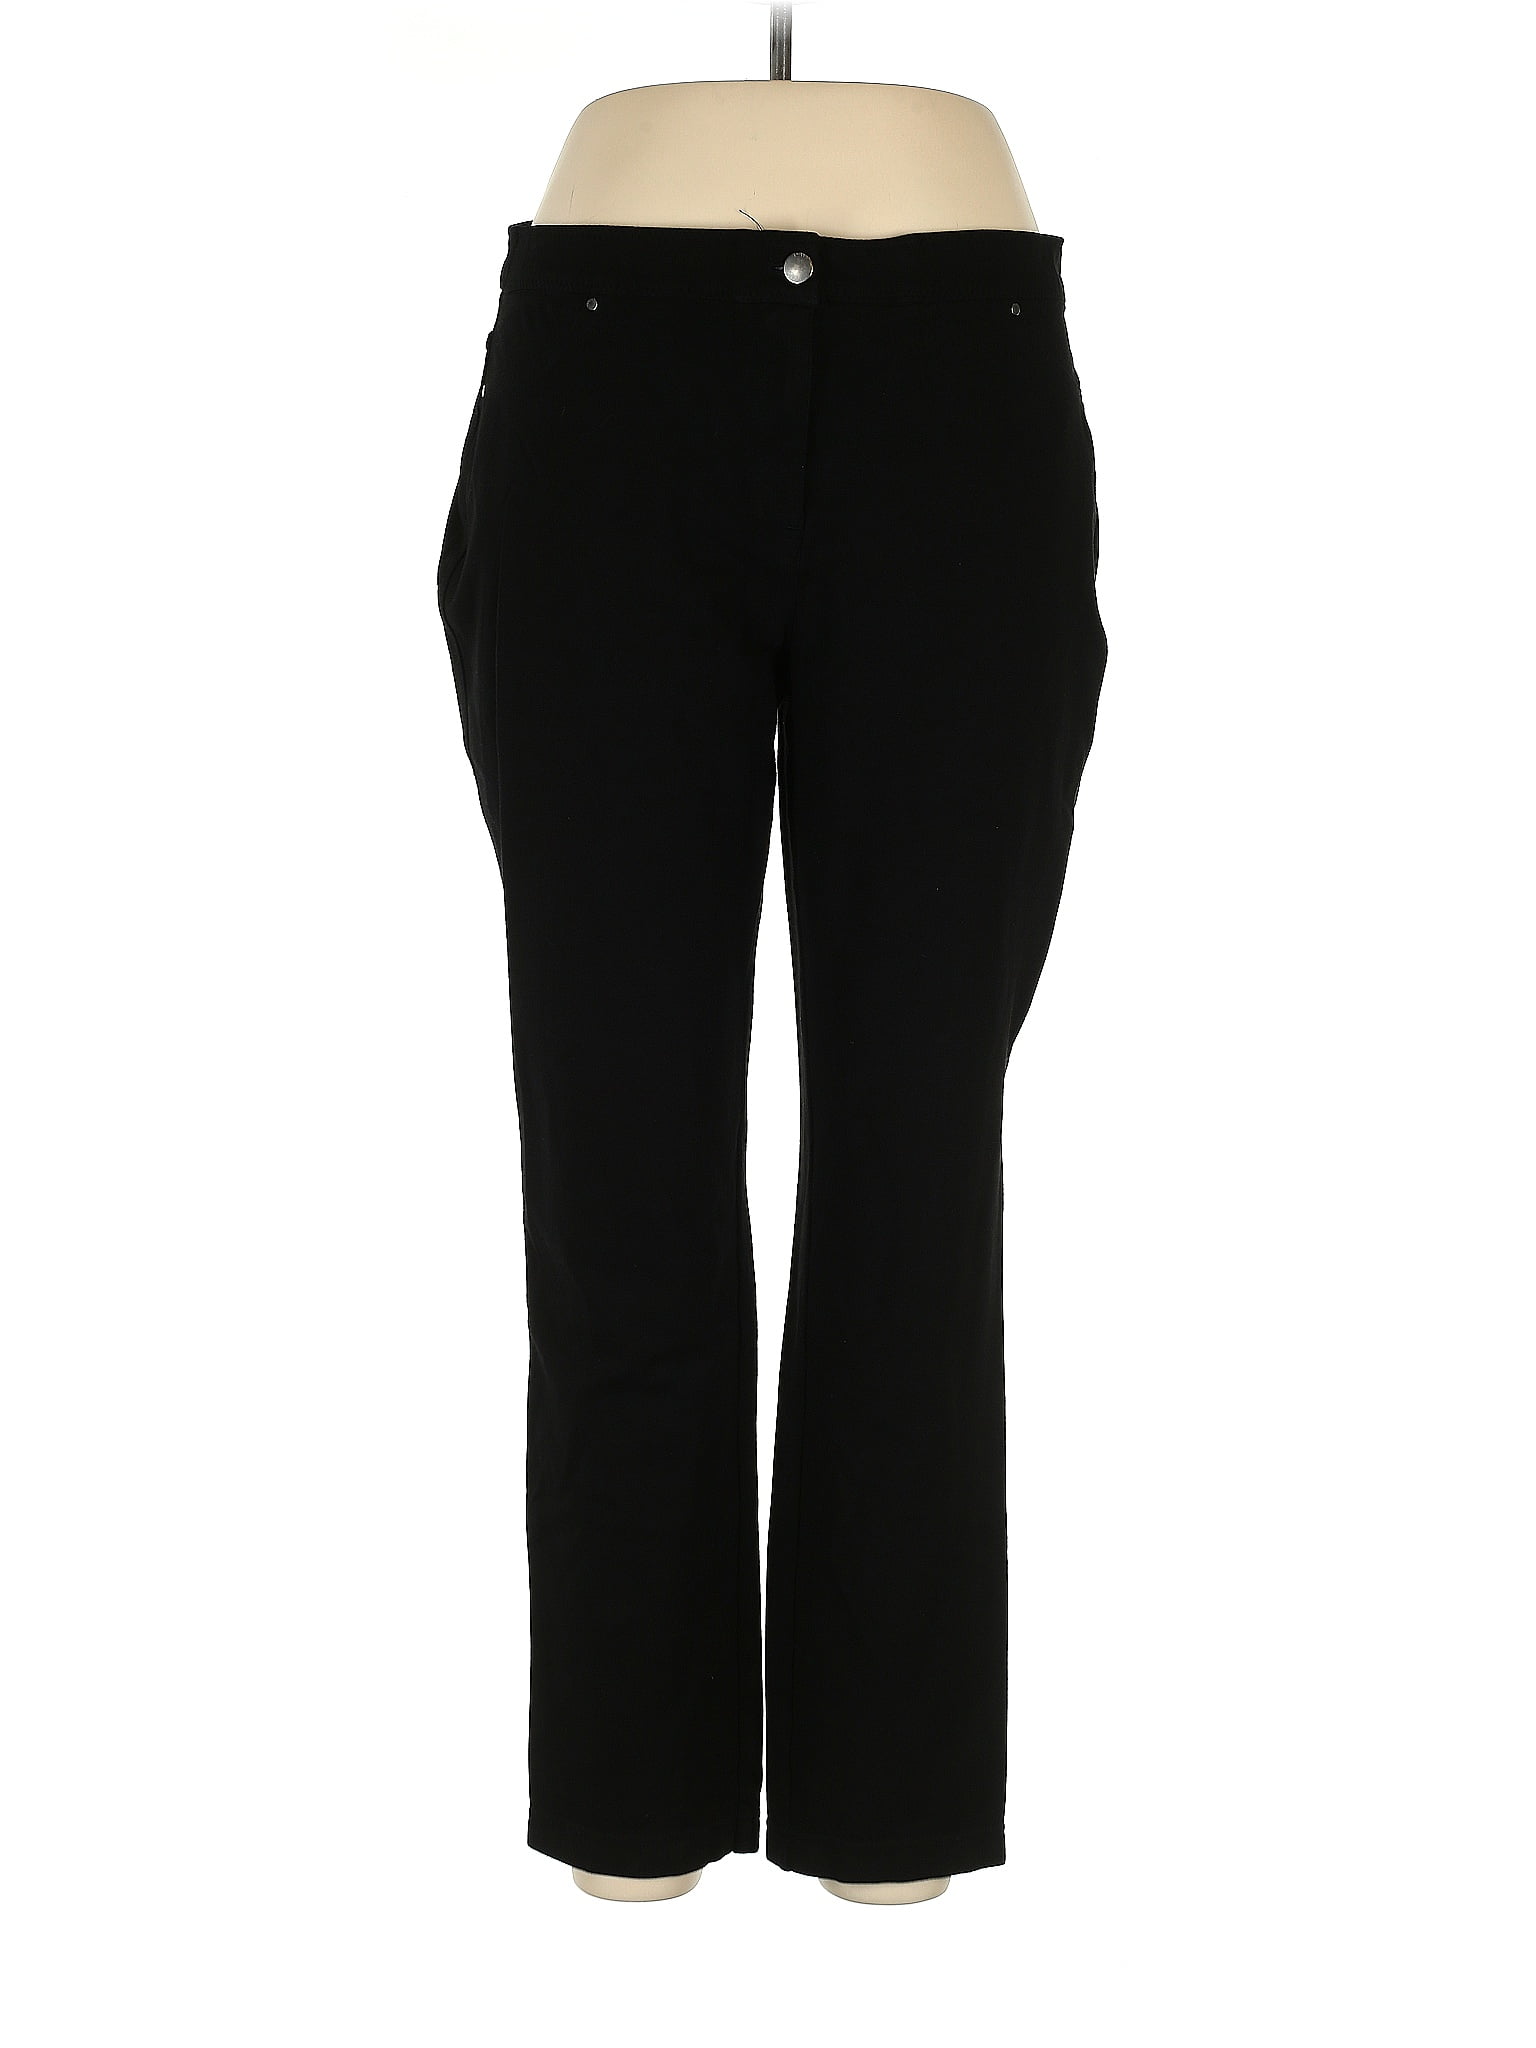 Chico's Polka Dots Black Casual Pants Size Lg (2) - 81% off | ThredUp